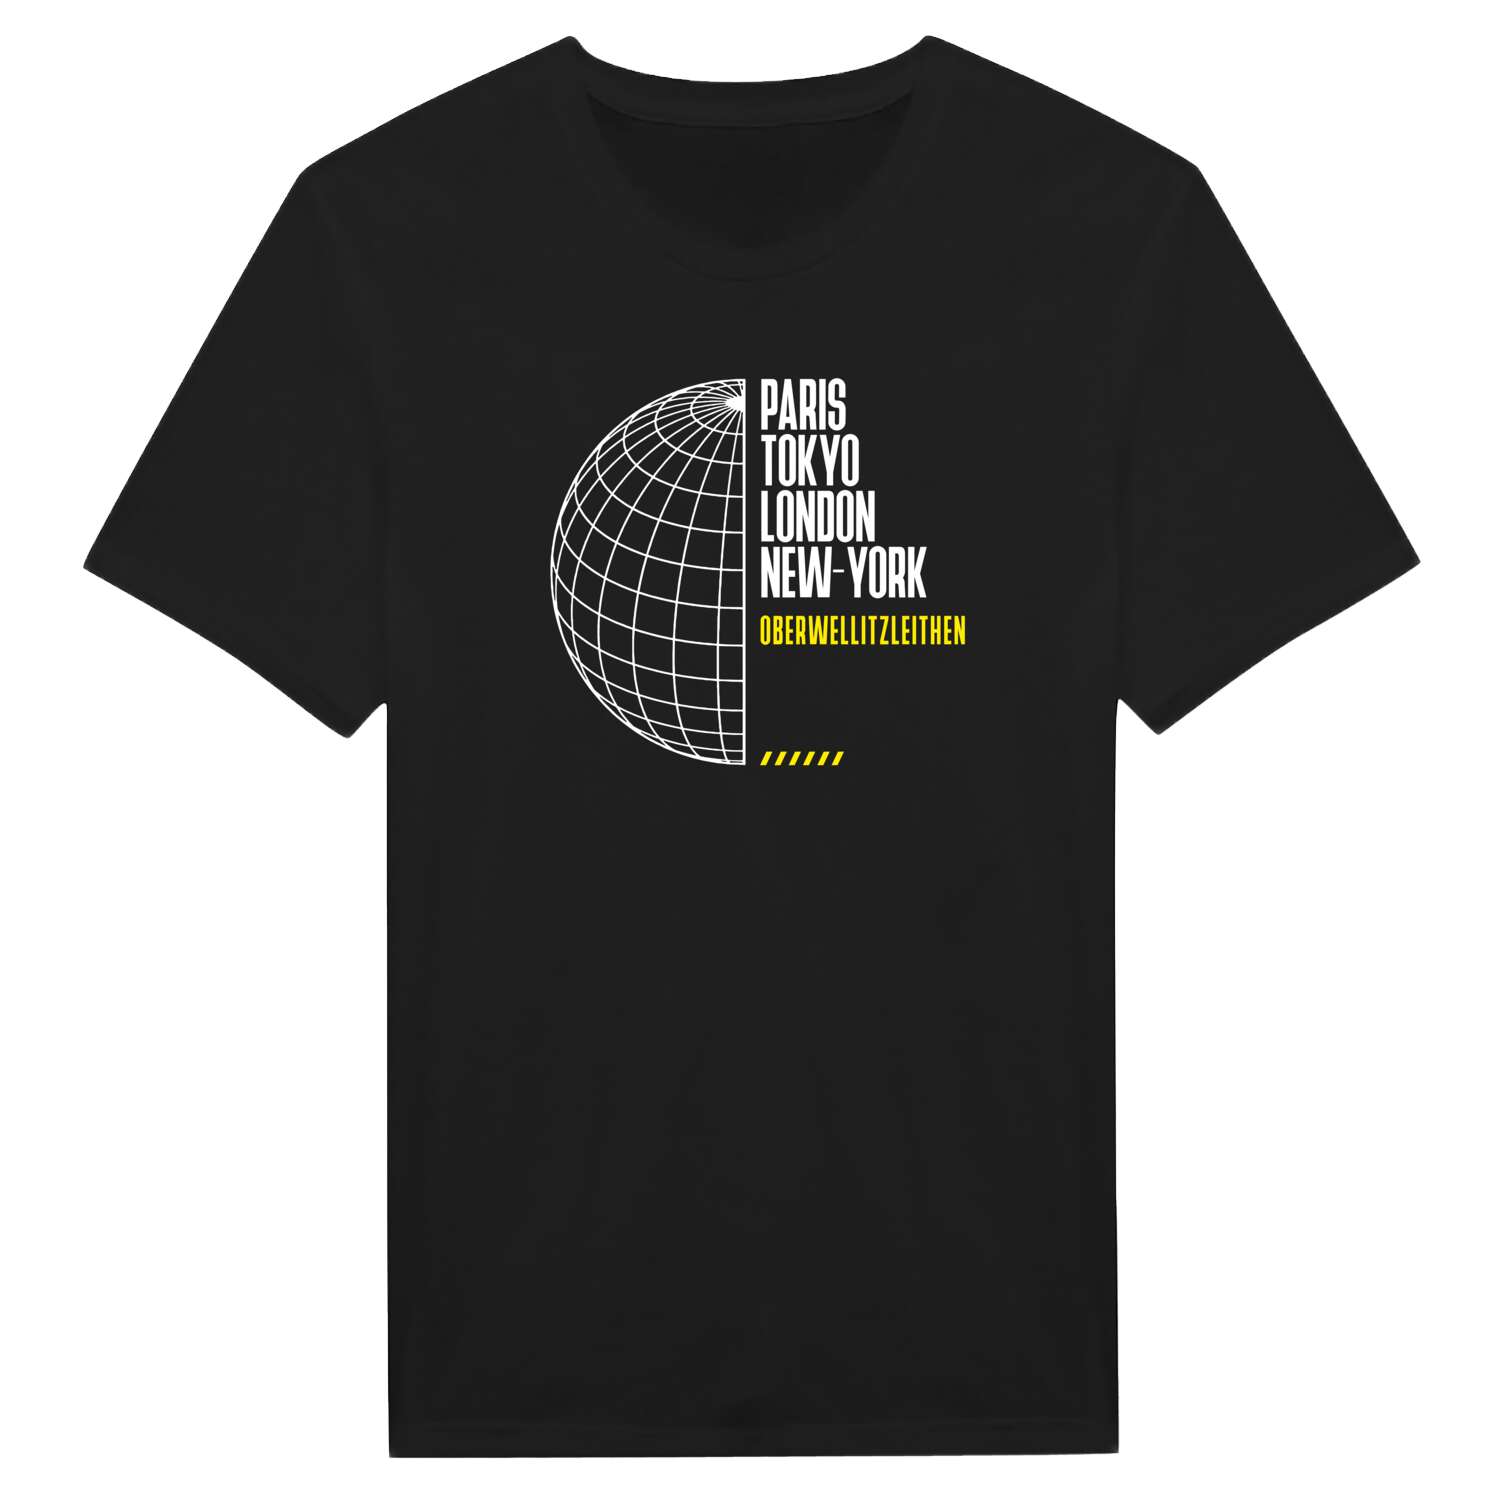 Oberwellitzleithen T-Shirt »Paris Tokyo London«